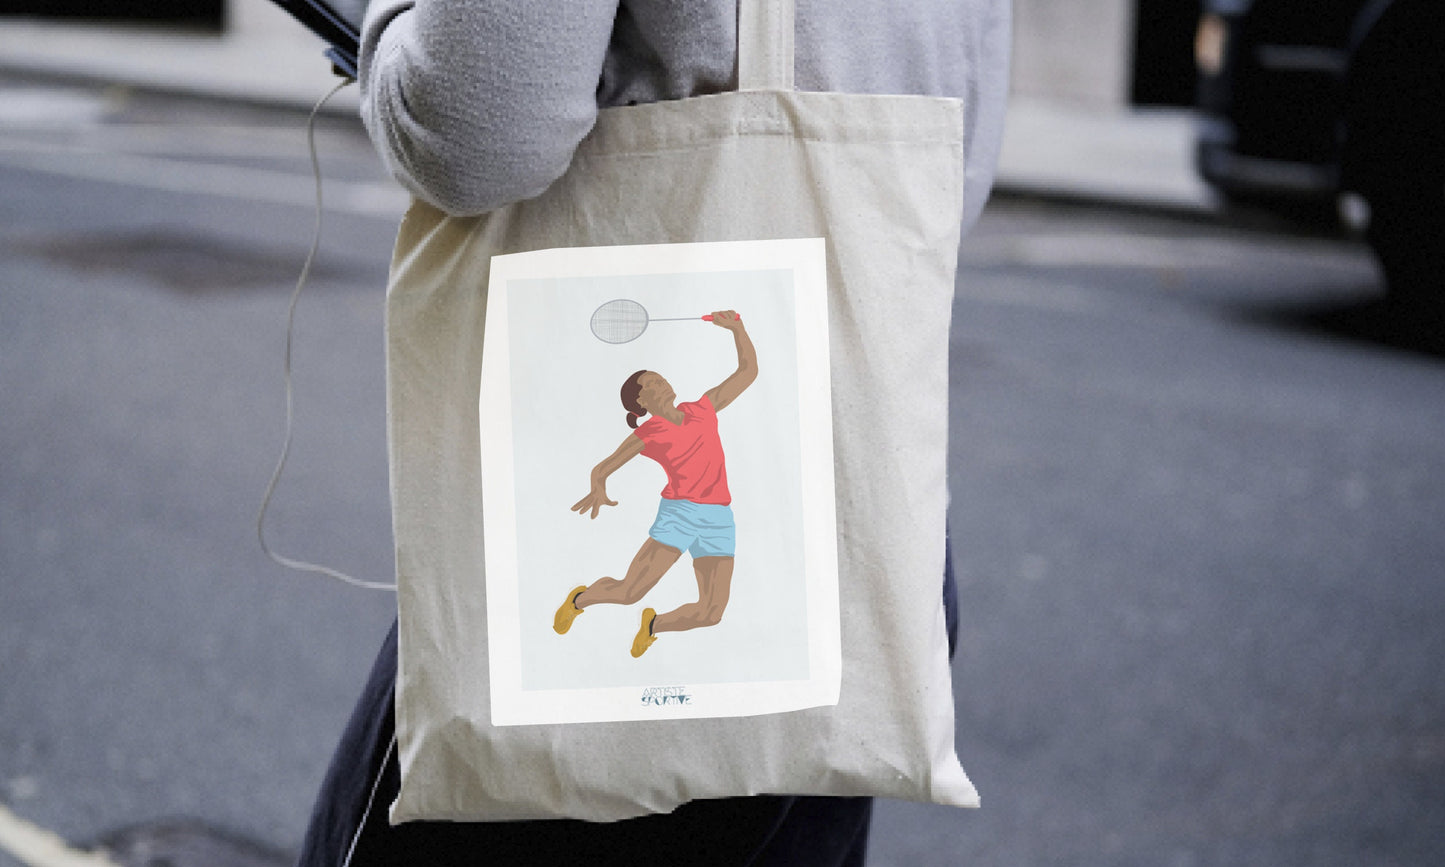 Tote bag ou sac "Joueuse de badminton"